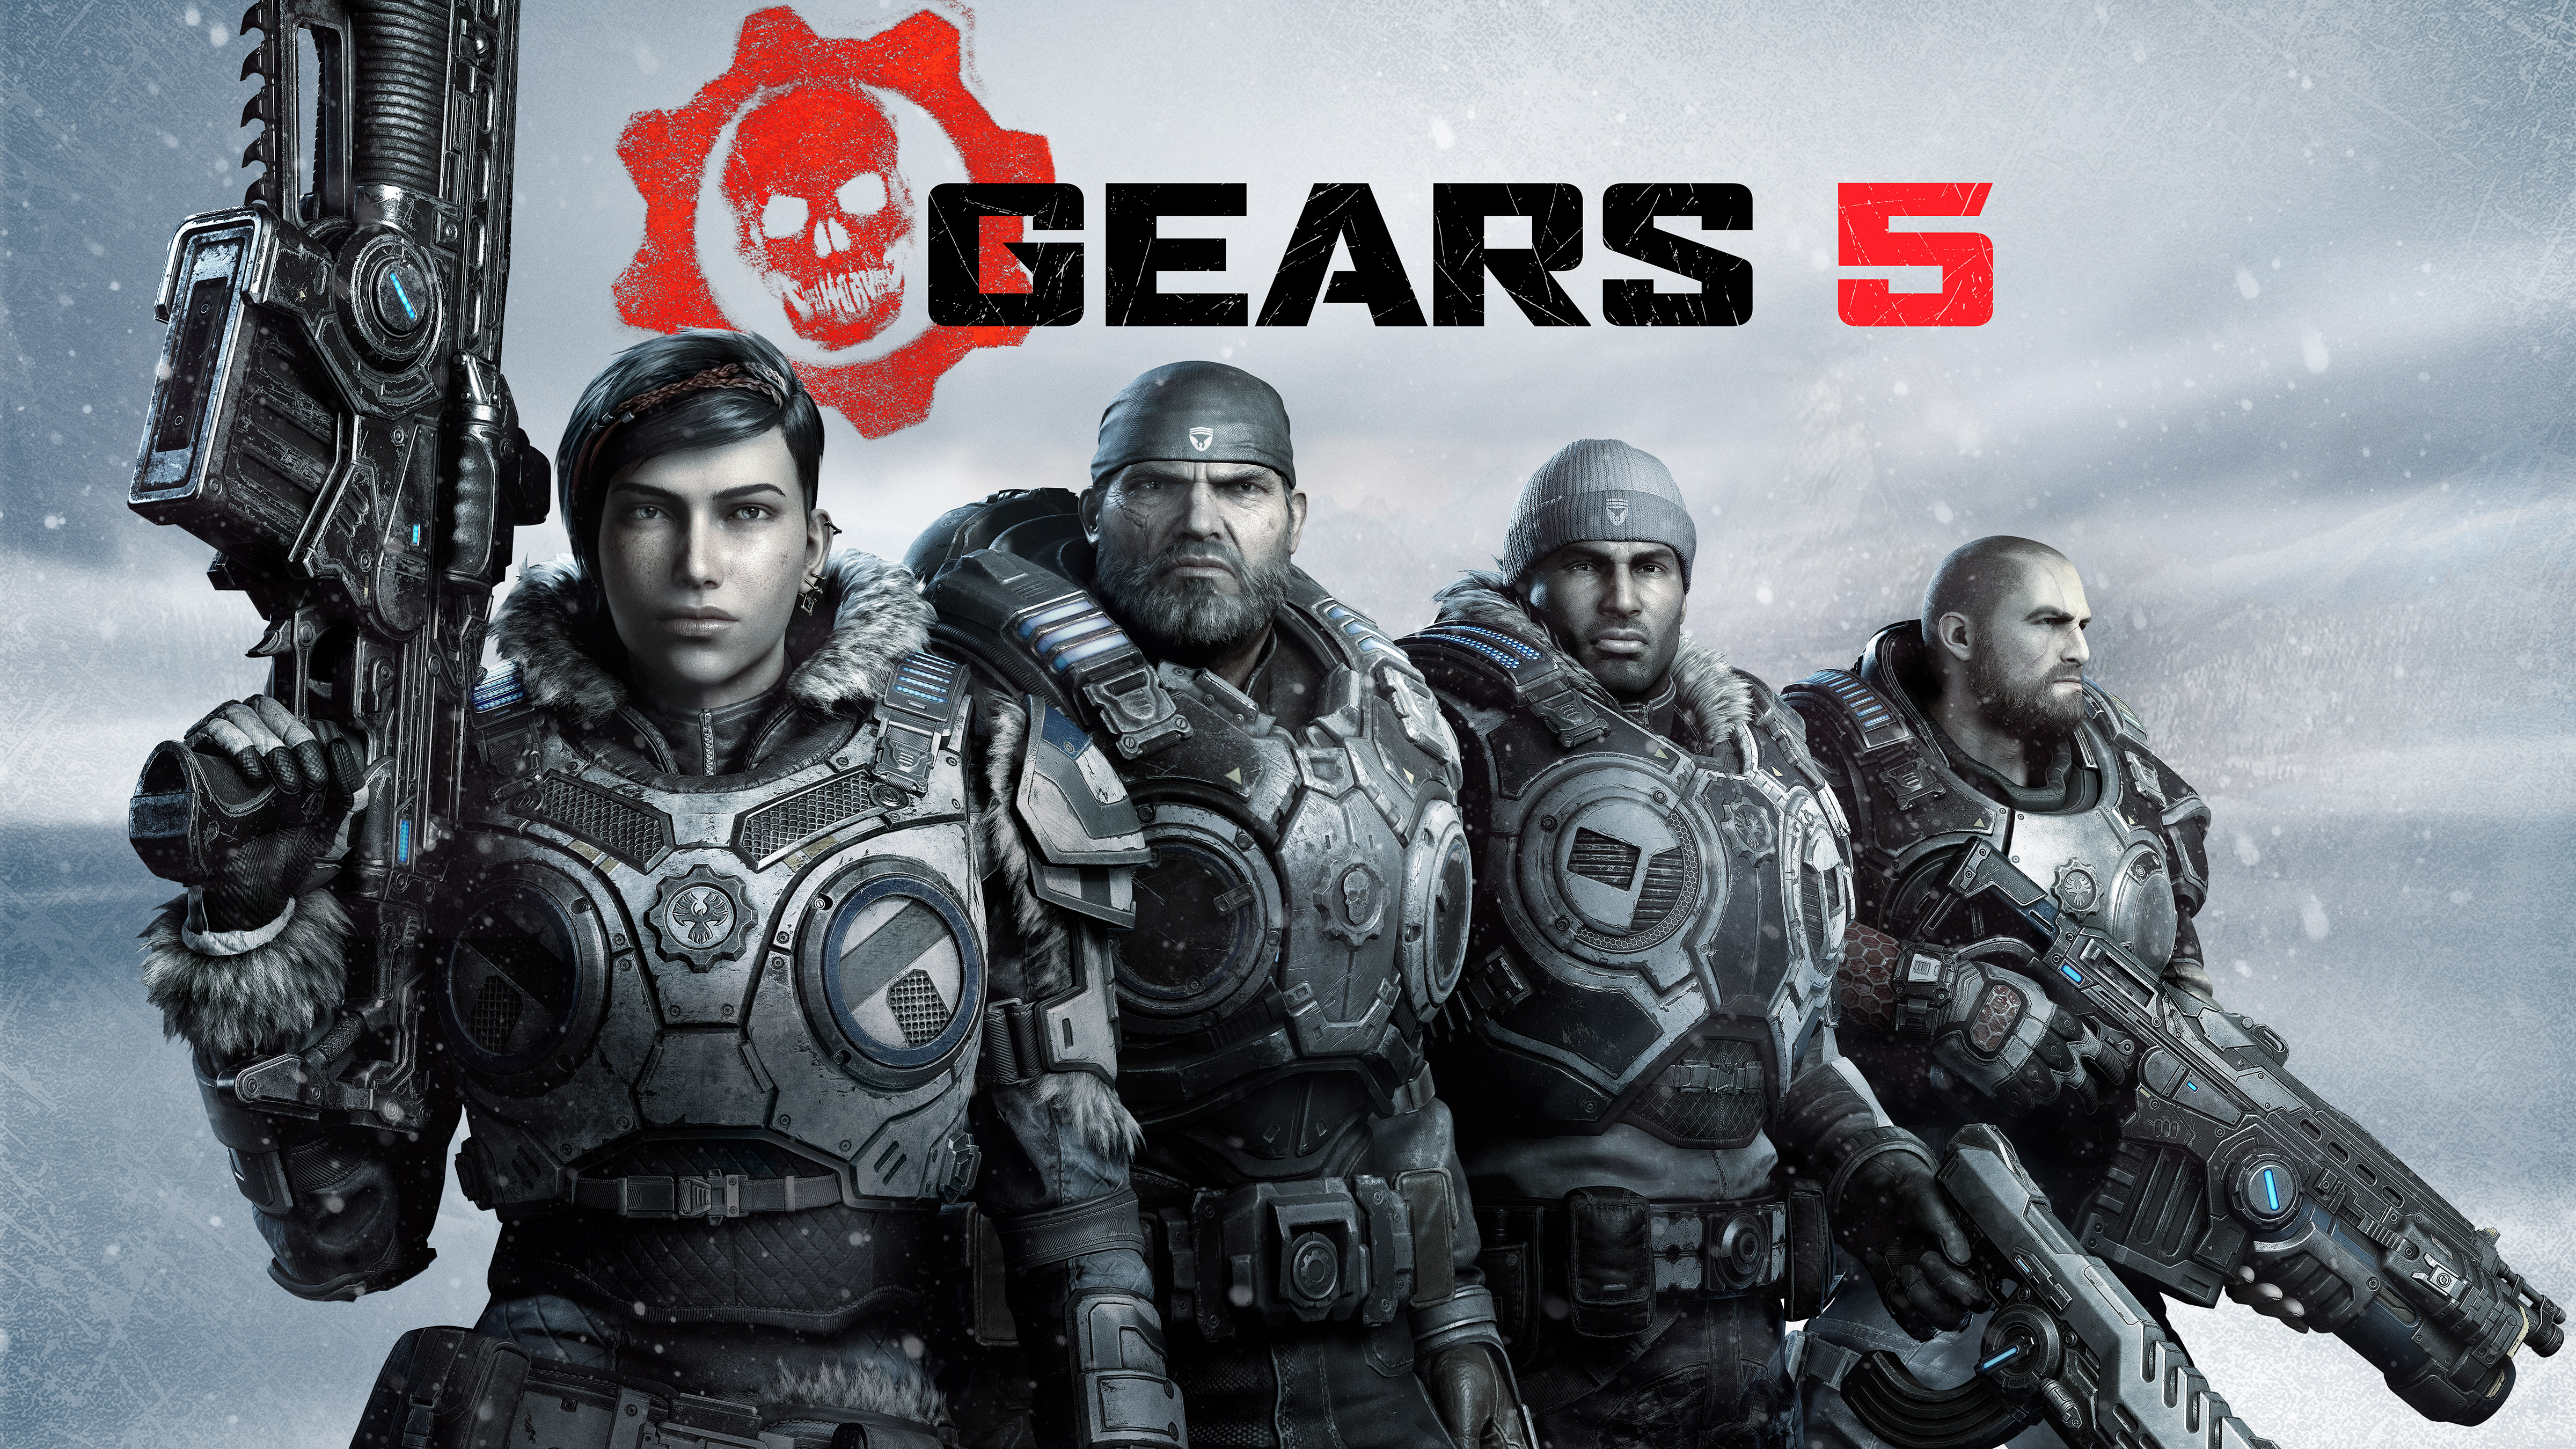 Gears 5 Wallpaper 4K, Kait Diaz, Marcus Fenix, Xbox One, Xbox Series X, Games